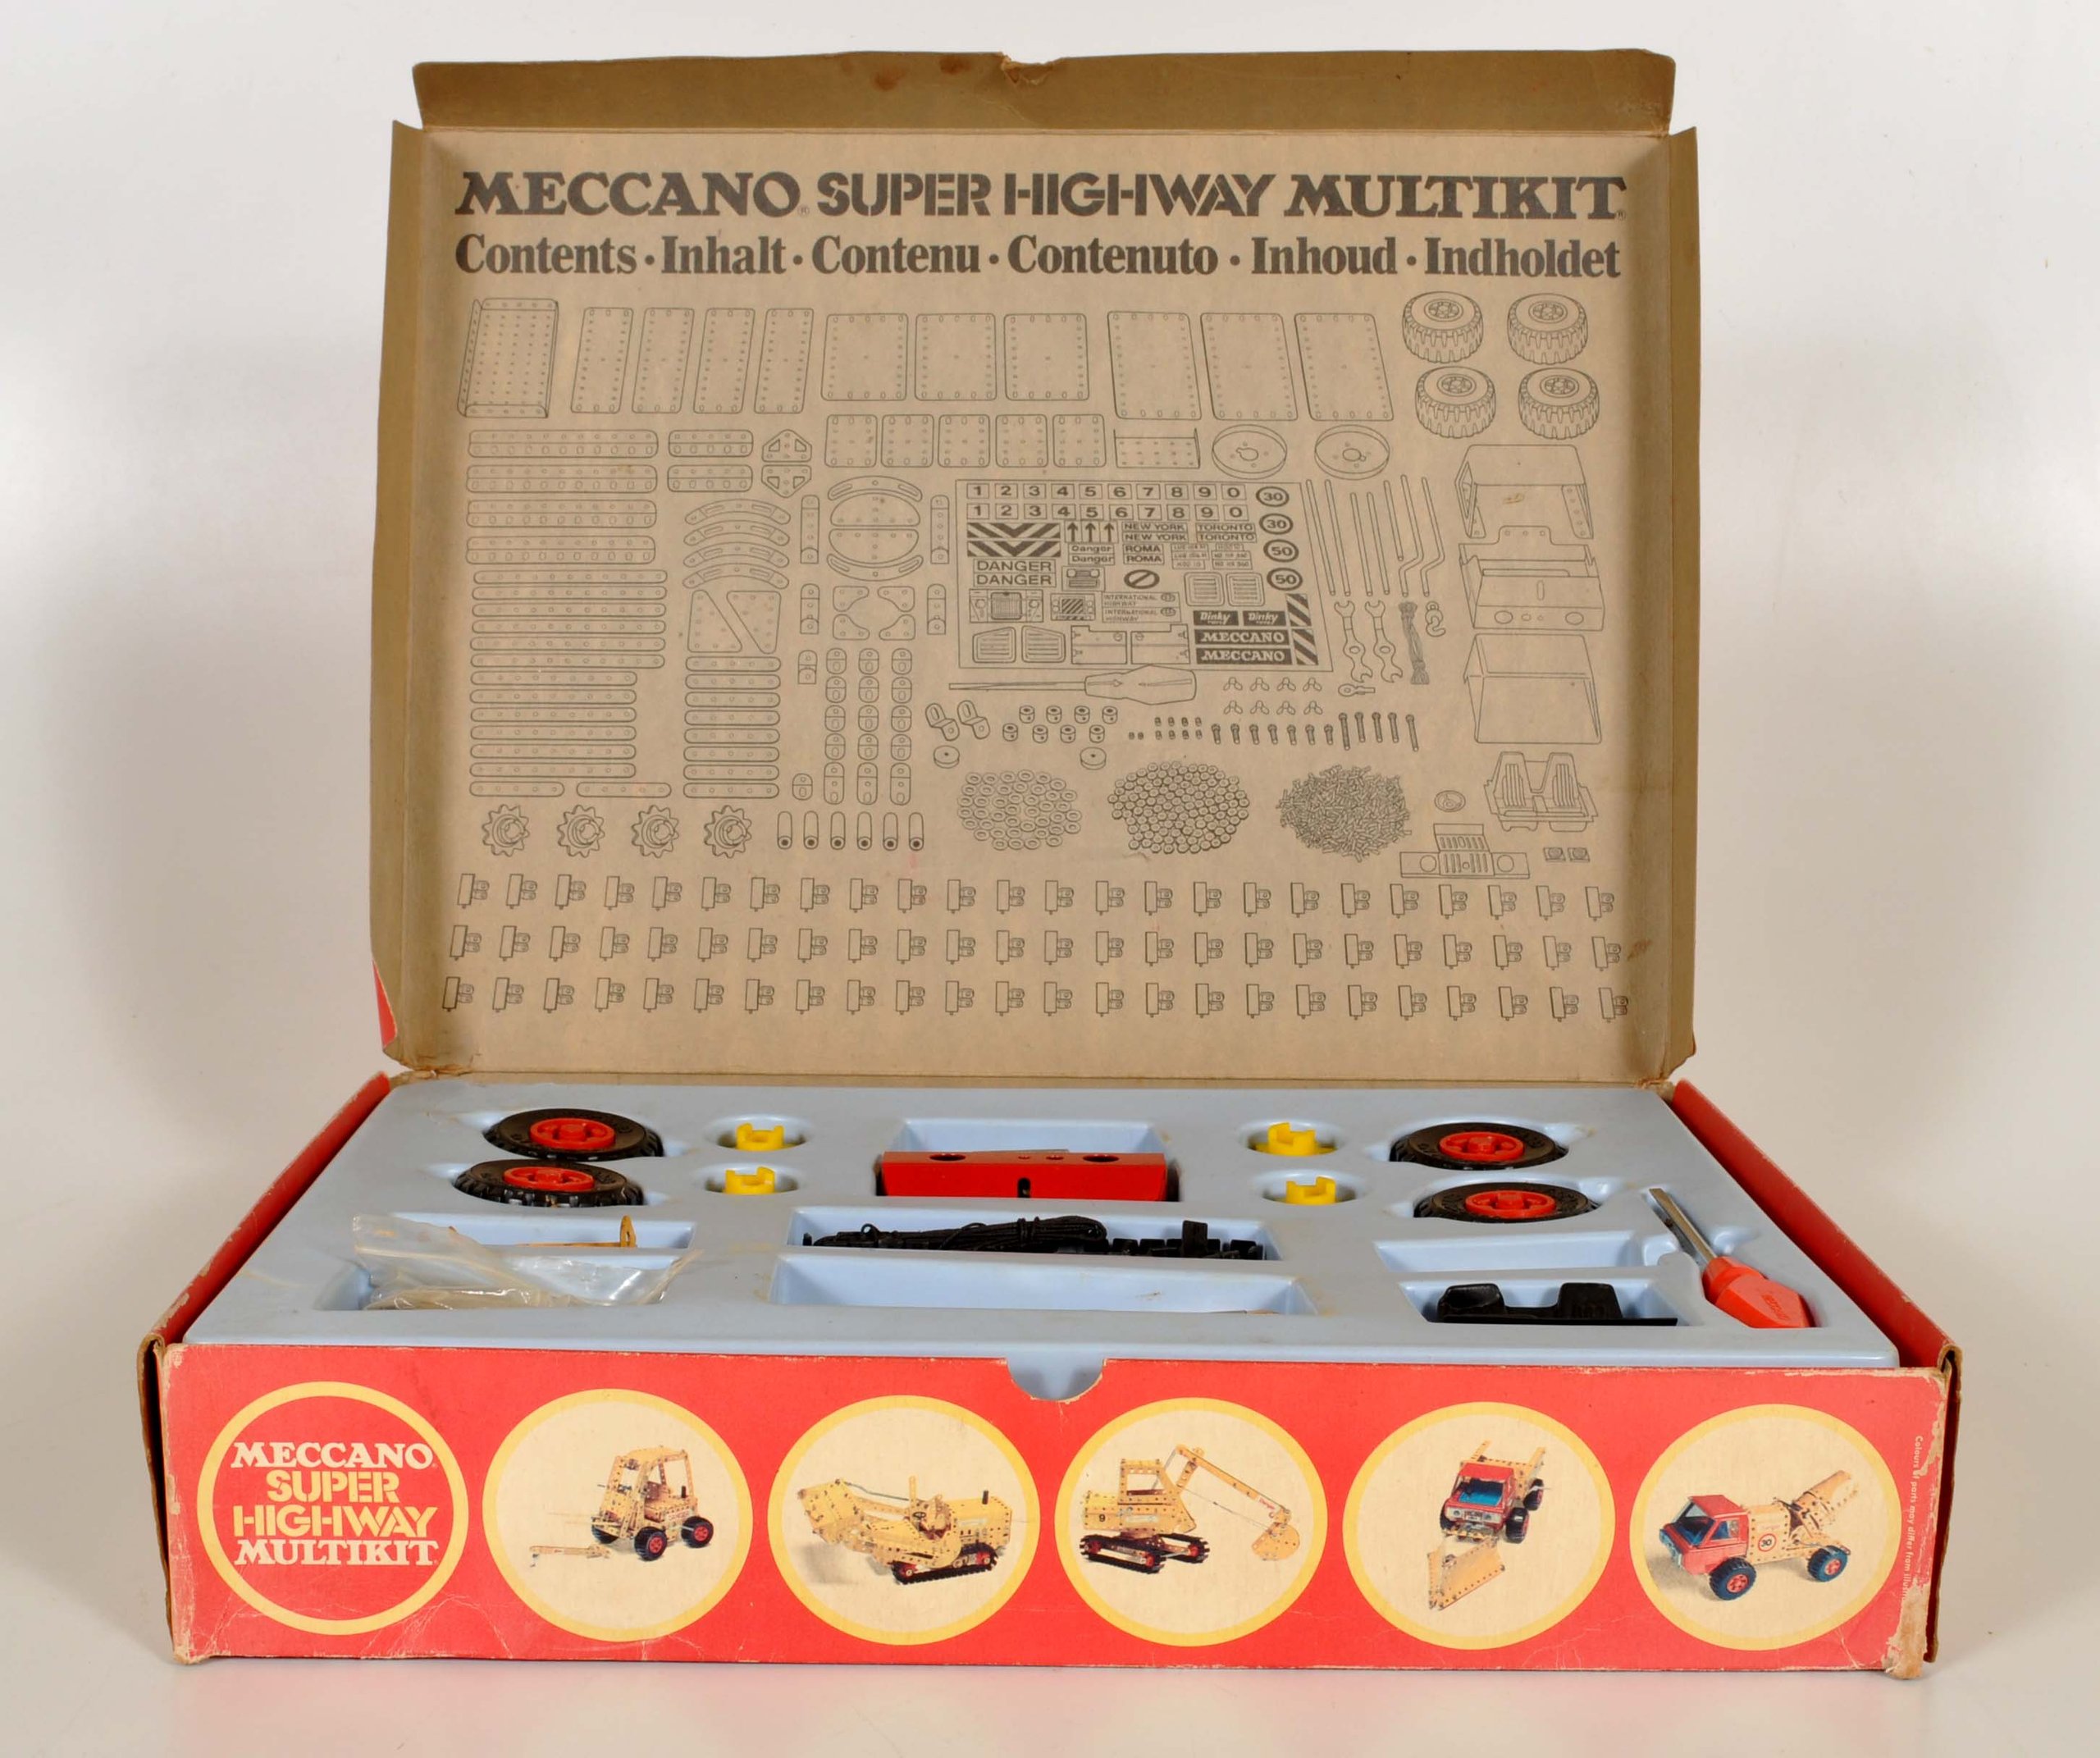 Meccano Super Highway Multikit